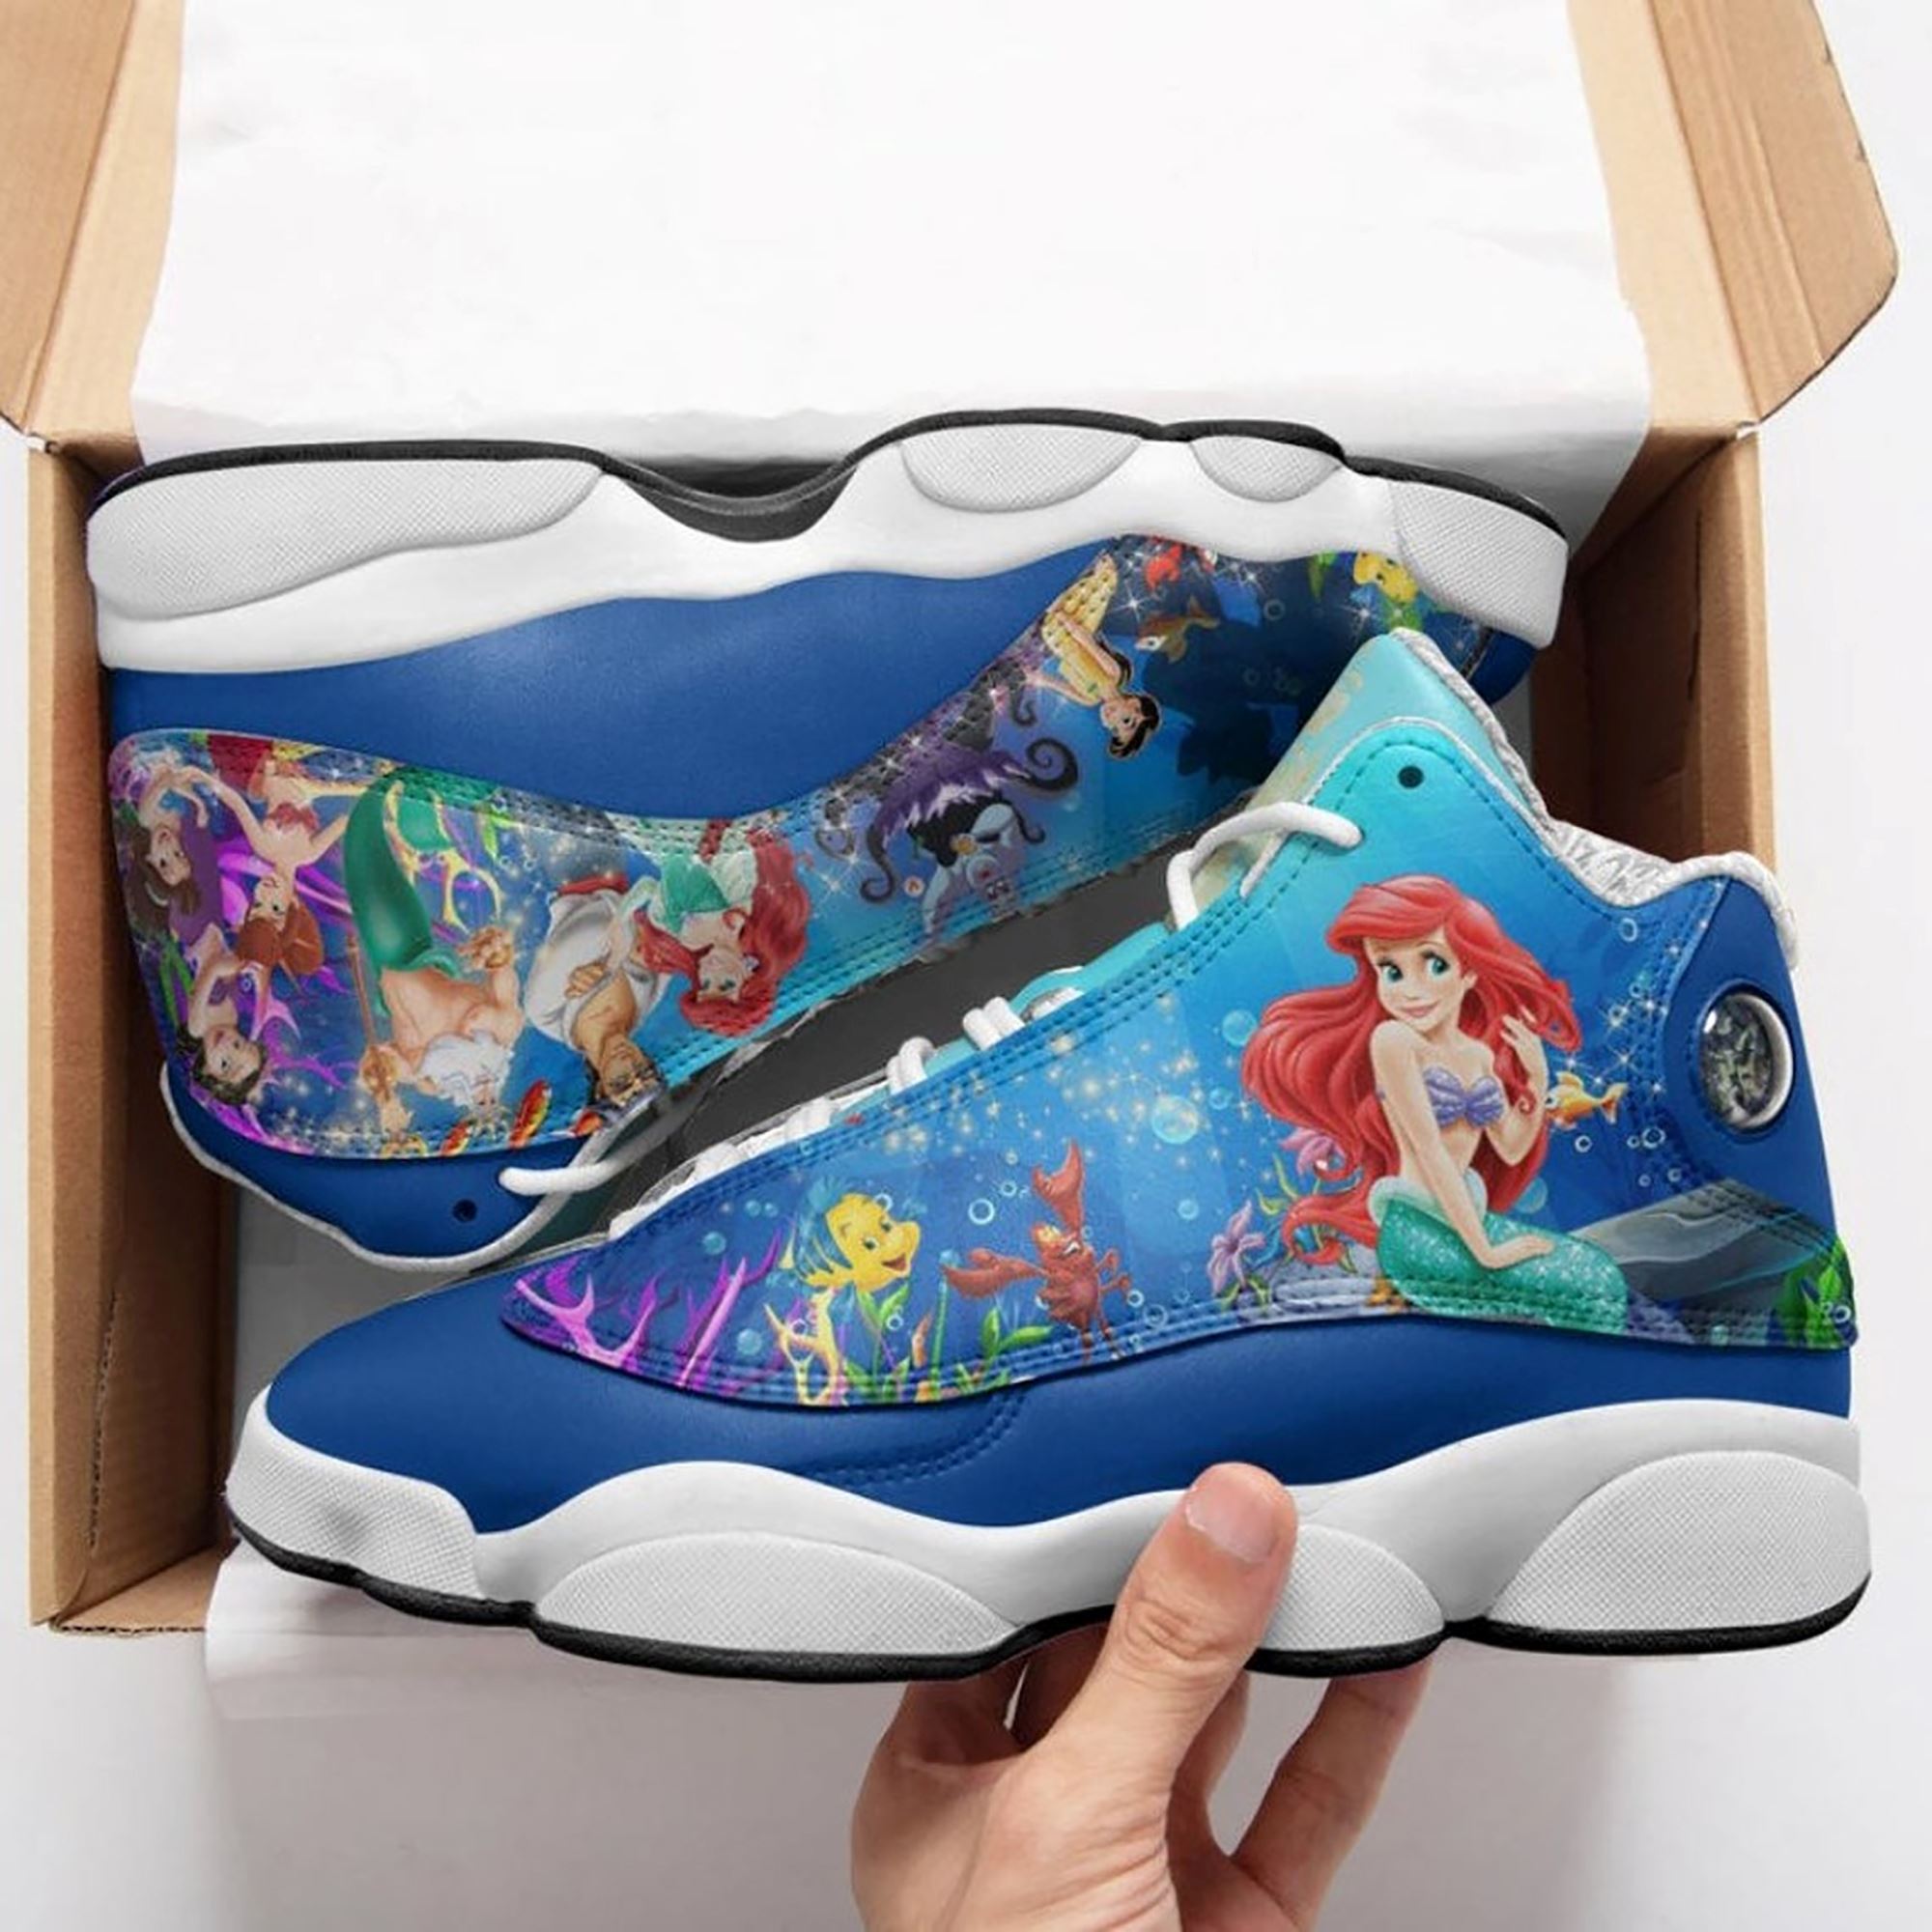 Disney Ariel Air Jordan 13 Shoes The Little Mermaid Shoes The Little Mermaid Sneakers The Little Mermaid Leather Shoes Gift For Woman